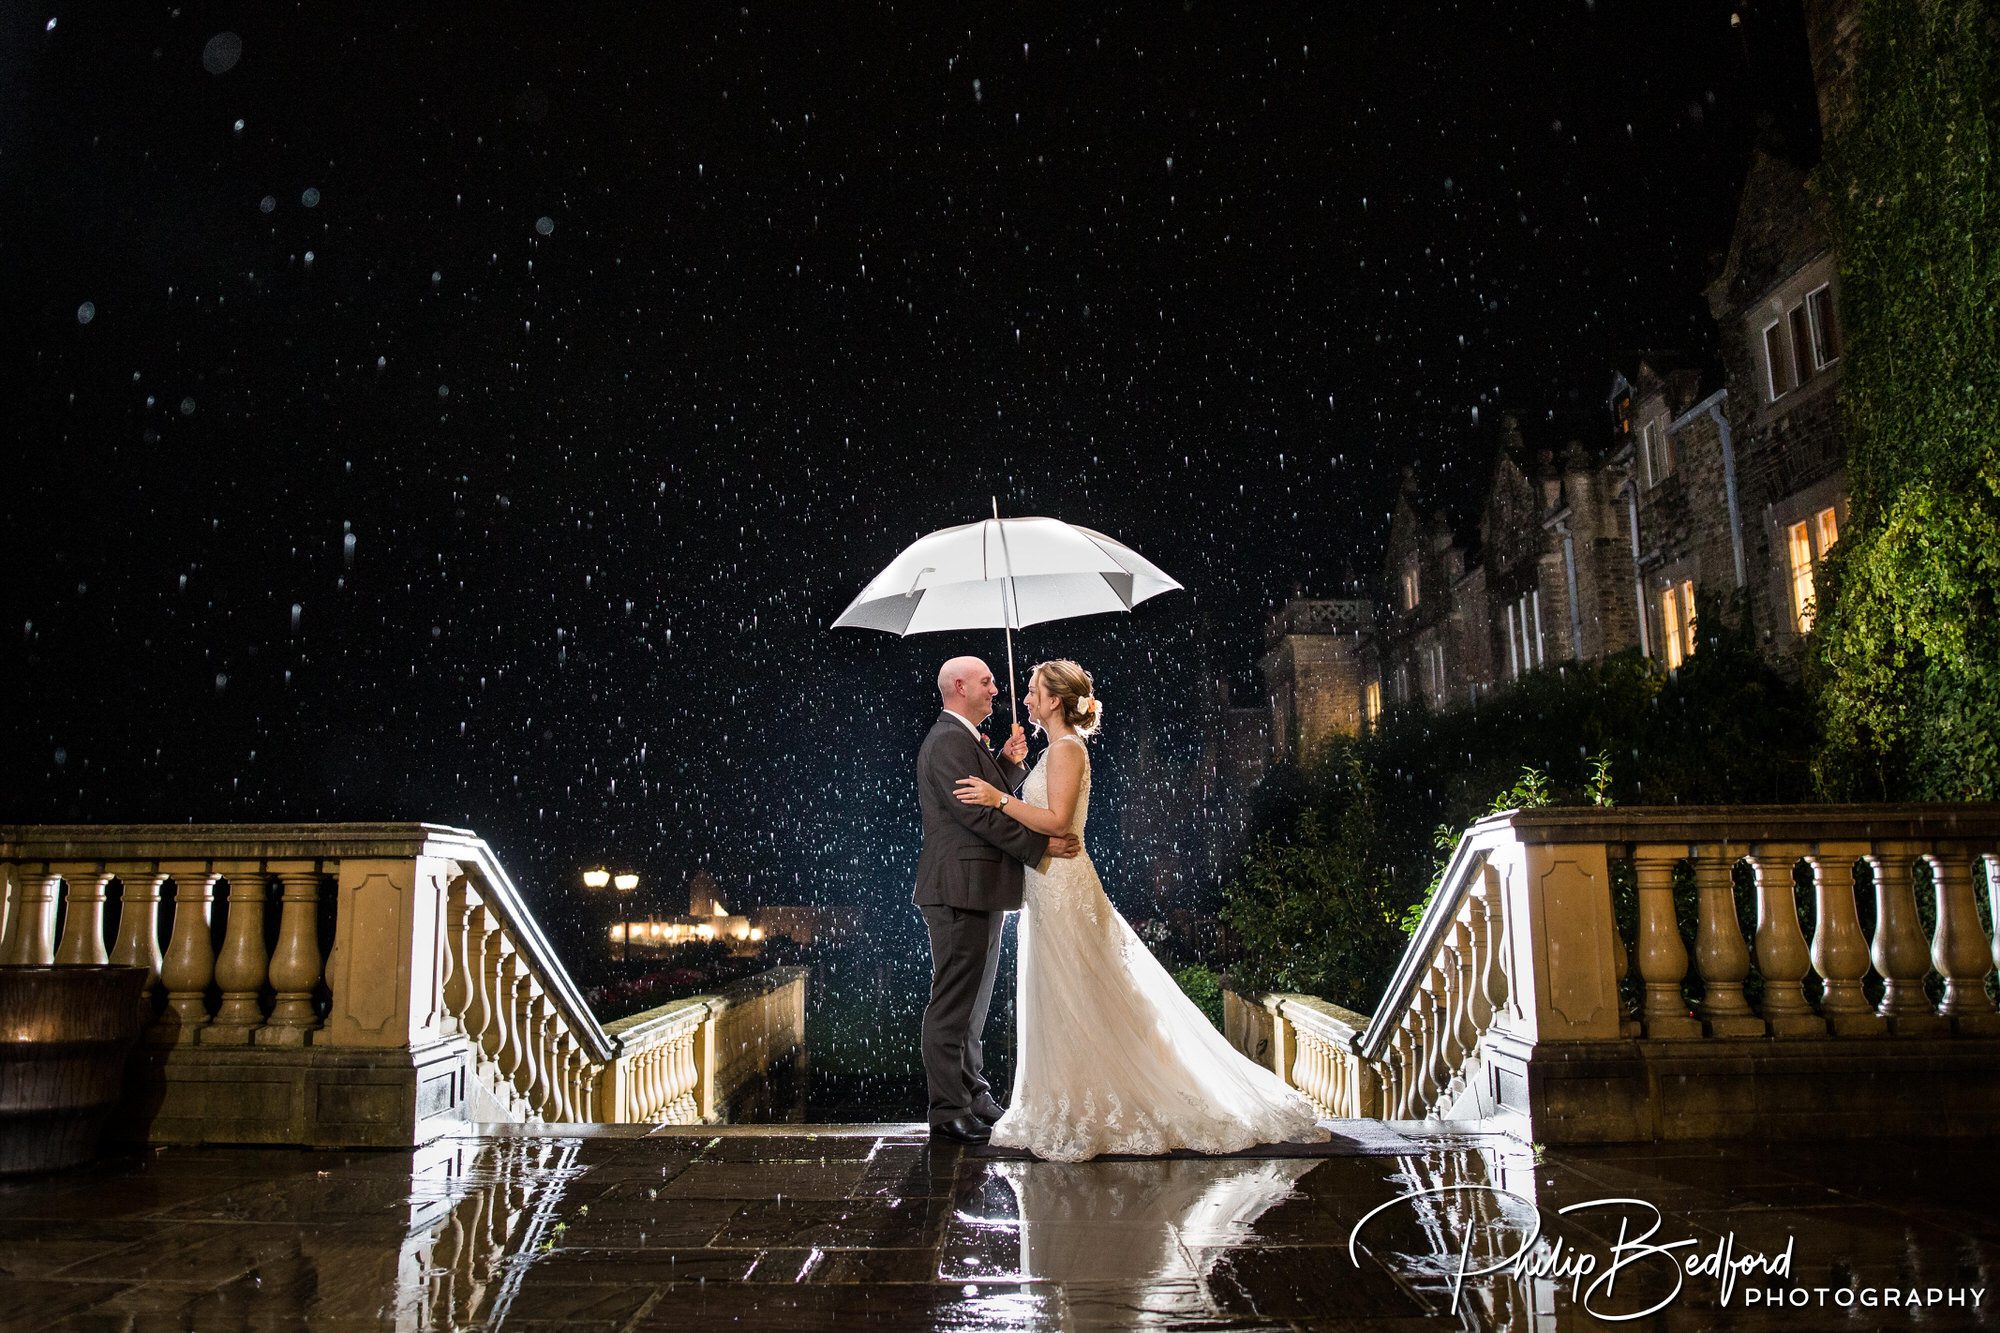 Reportage Wedding photograph of Bride & Groom in the rain